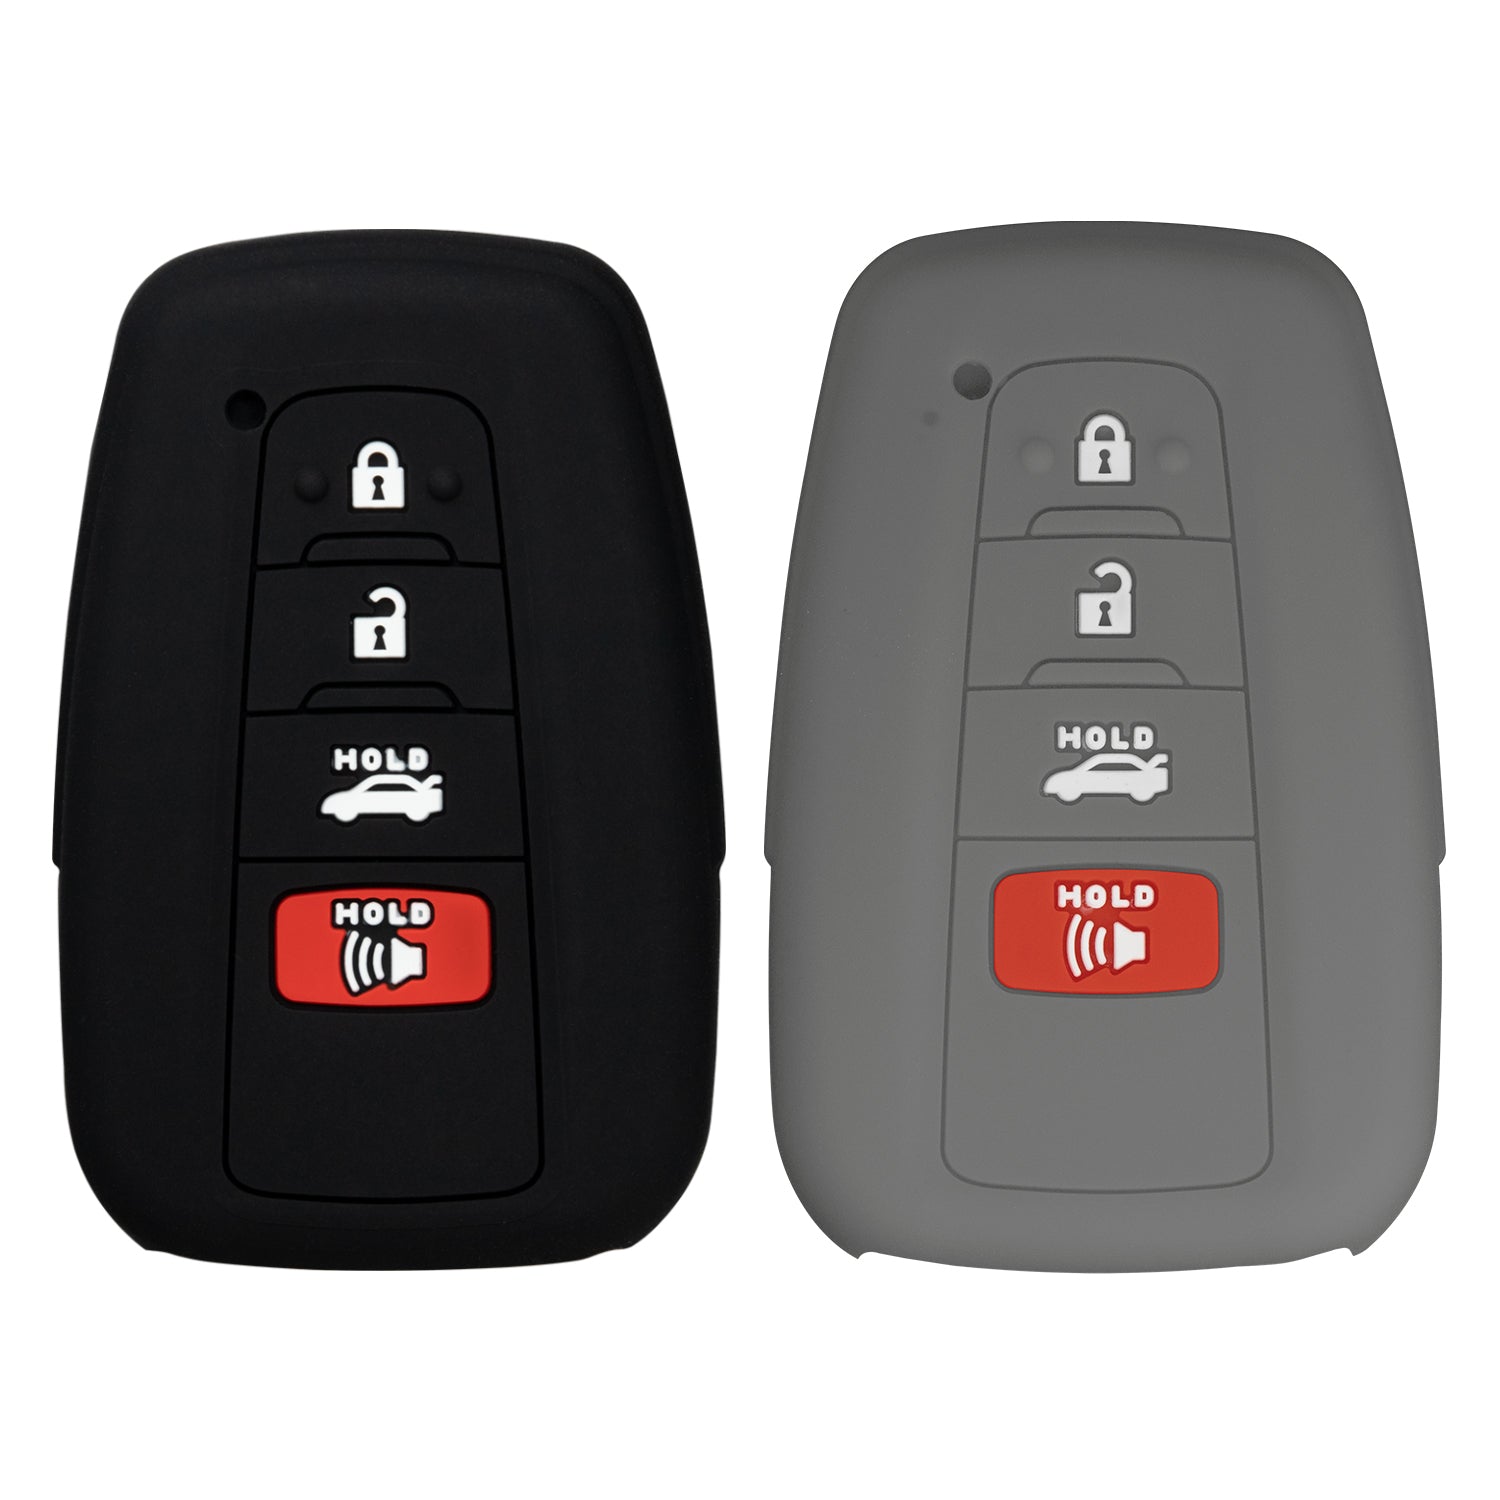 Silicone Case 4 Button Shell for Toyota Smart Proximity Remote Key HYQ14FBE, HYQ14FBC, HYQ14AHP, HYQ14FBN (Black & Gray)